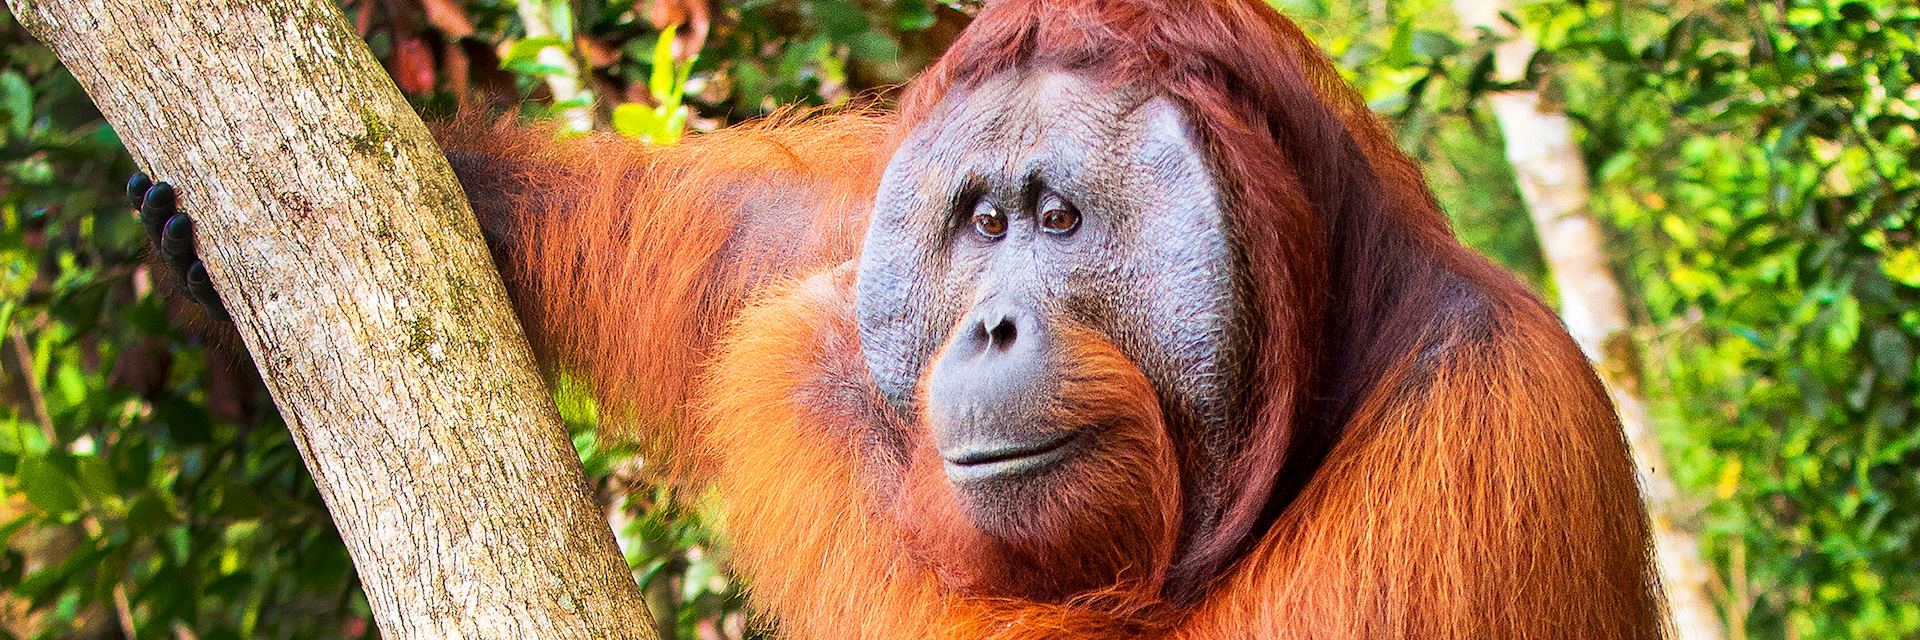 Orangutan, Kalimantan